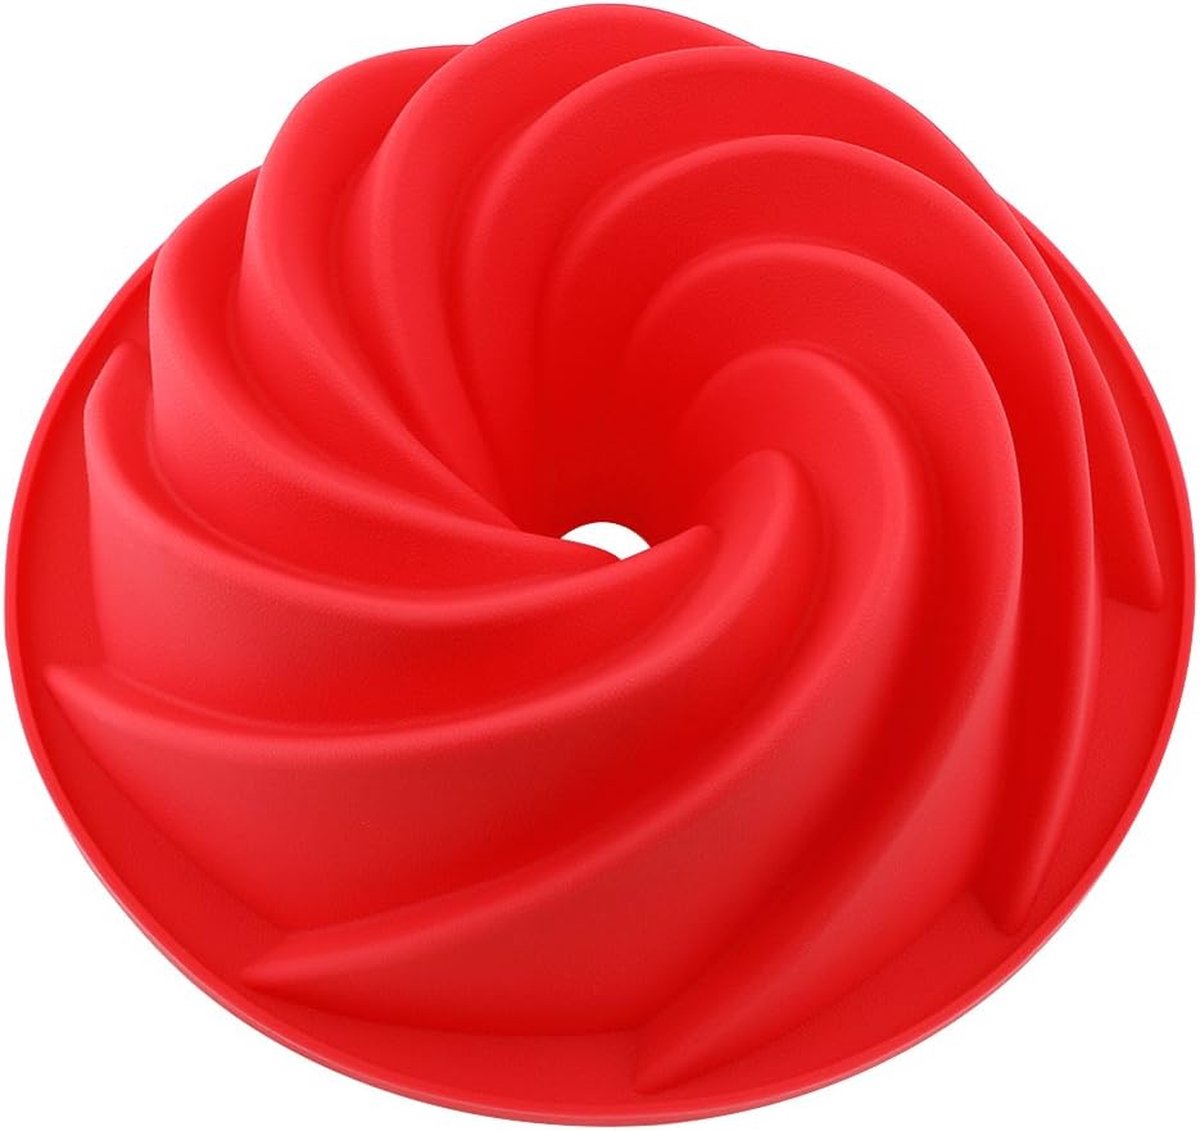 Siliconen tulbandcakevorm, bakvorm voor cake, pudding of ijstaart, 25 cm, rood